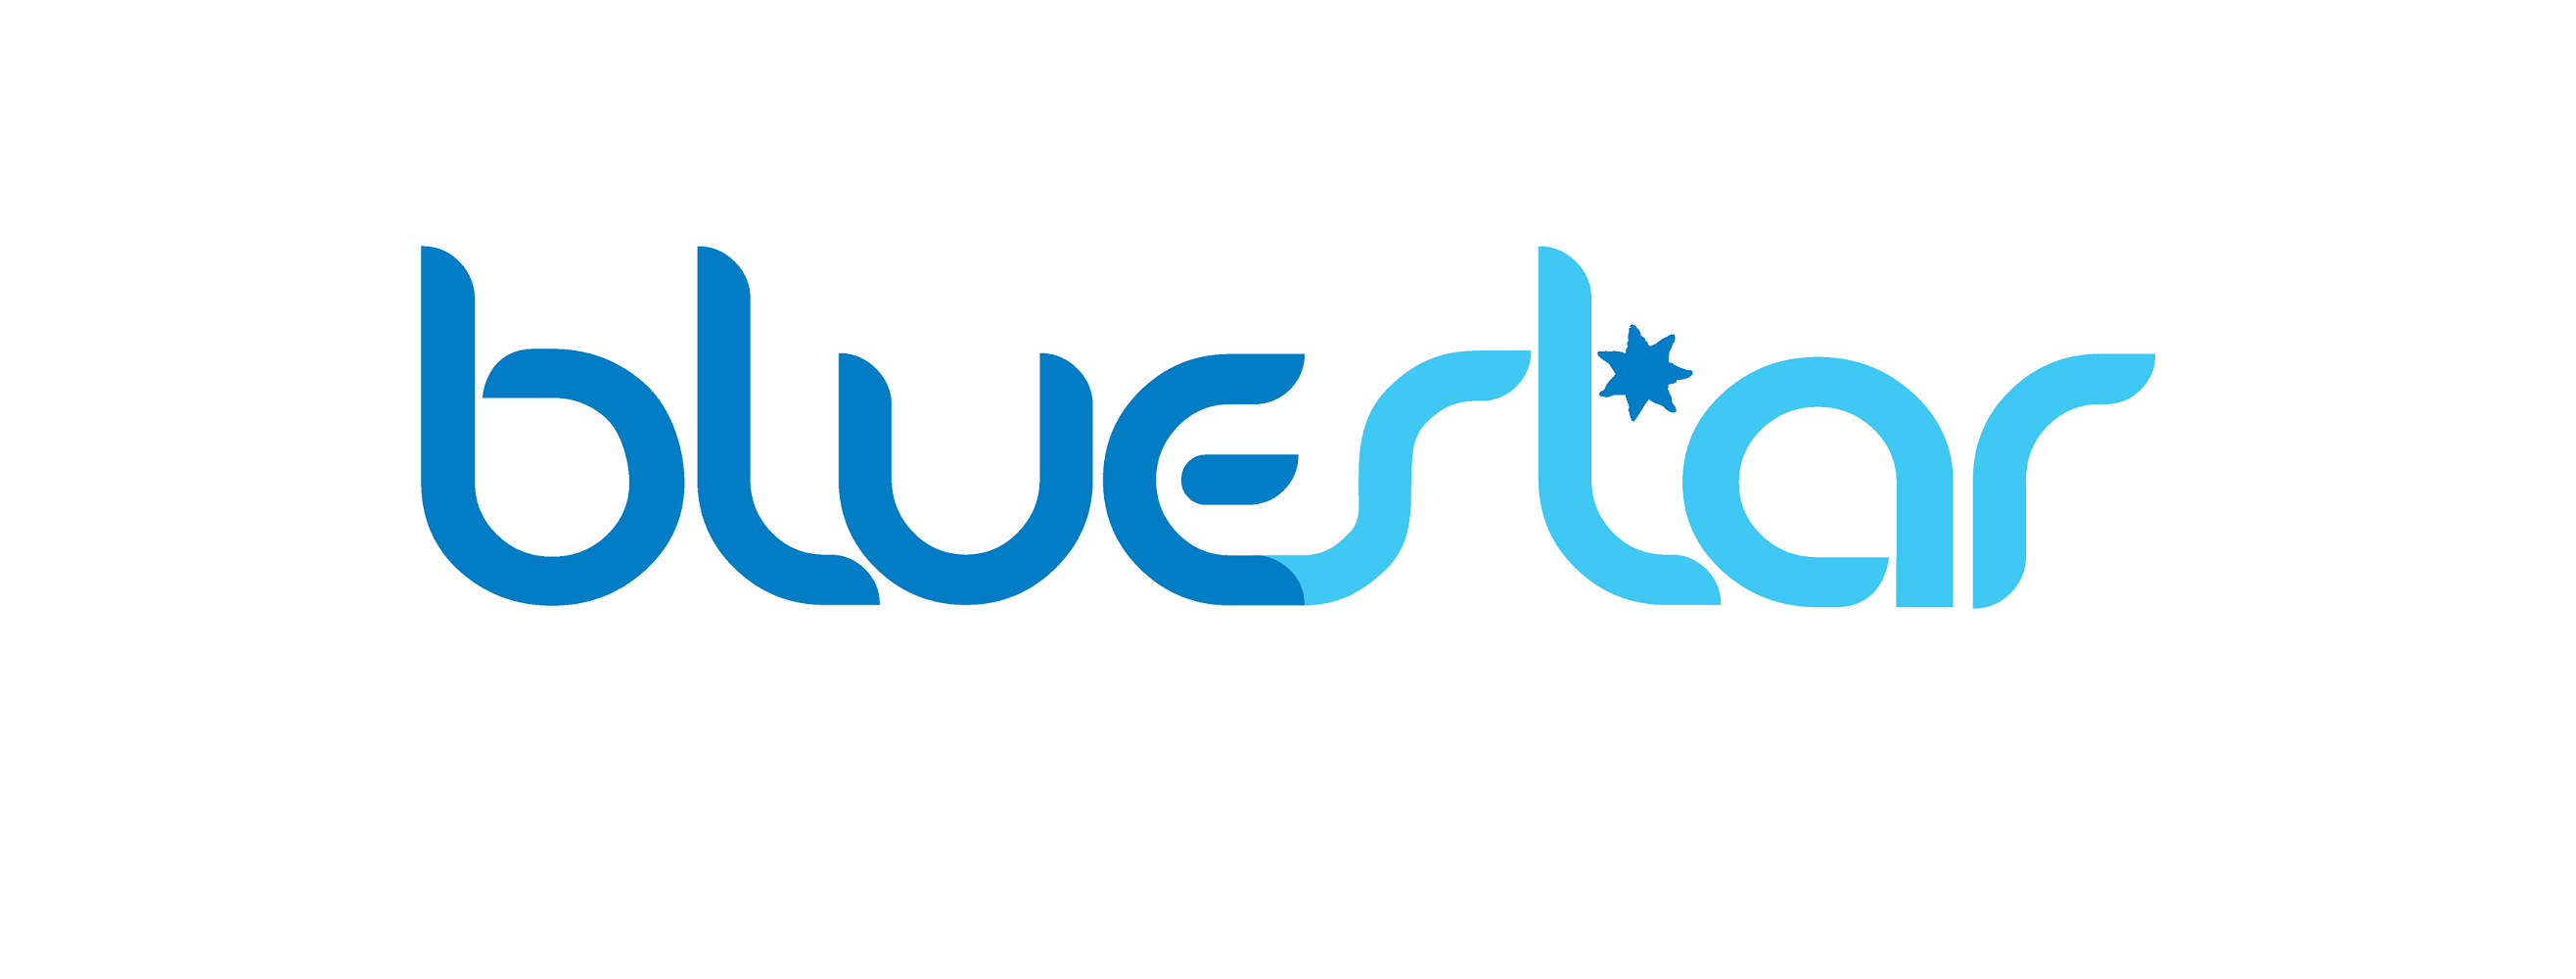 Blue Star Logo - About Bluestar - Bluestar